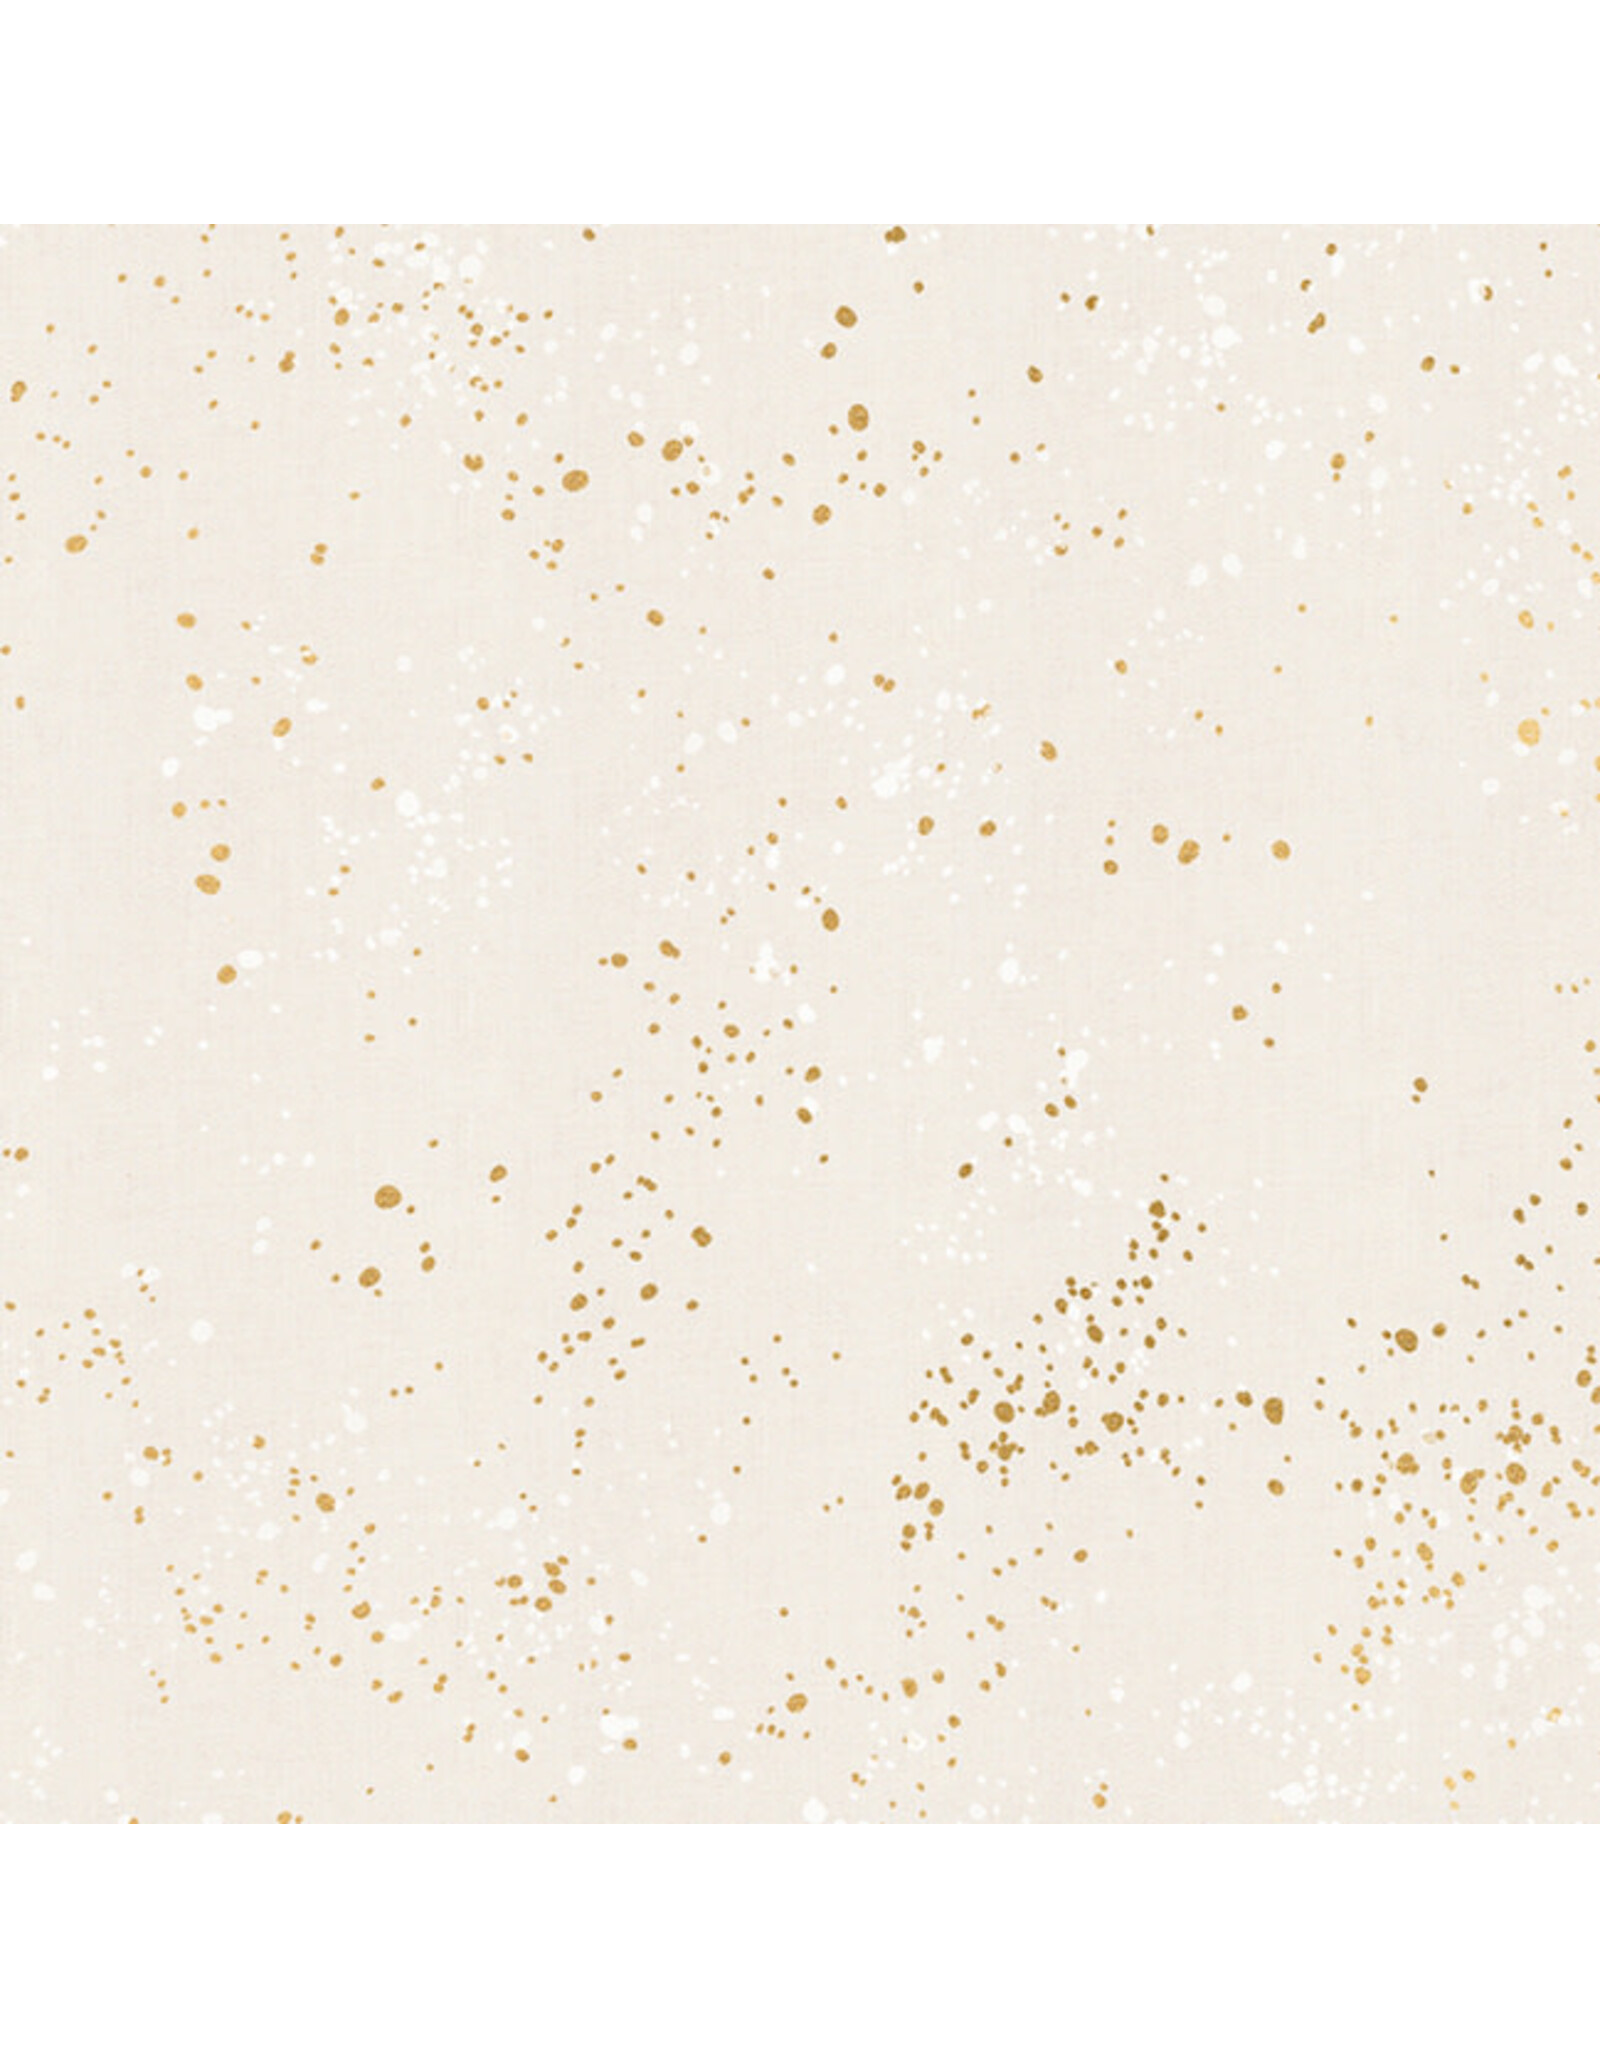 Rashida Coleman-Hale Speckled Metallic in White Gold, Fabric Half-Yards